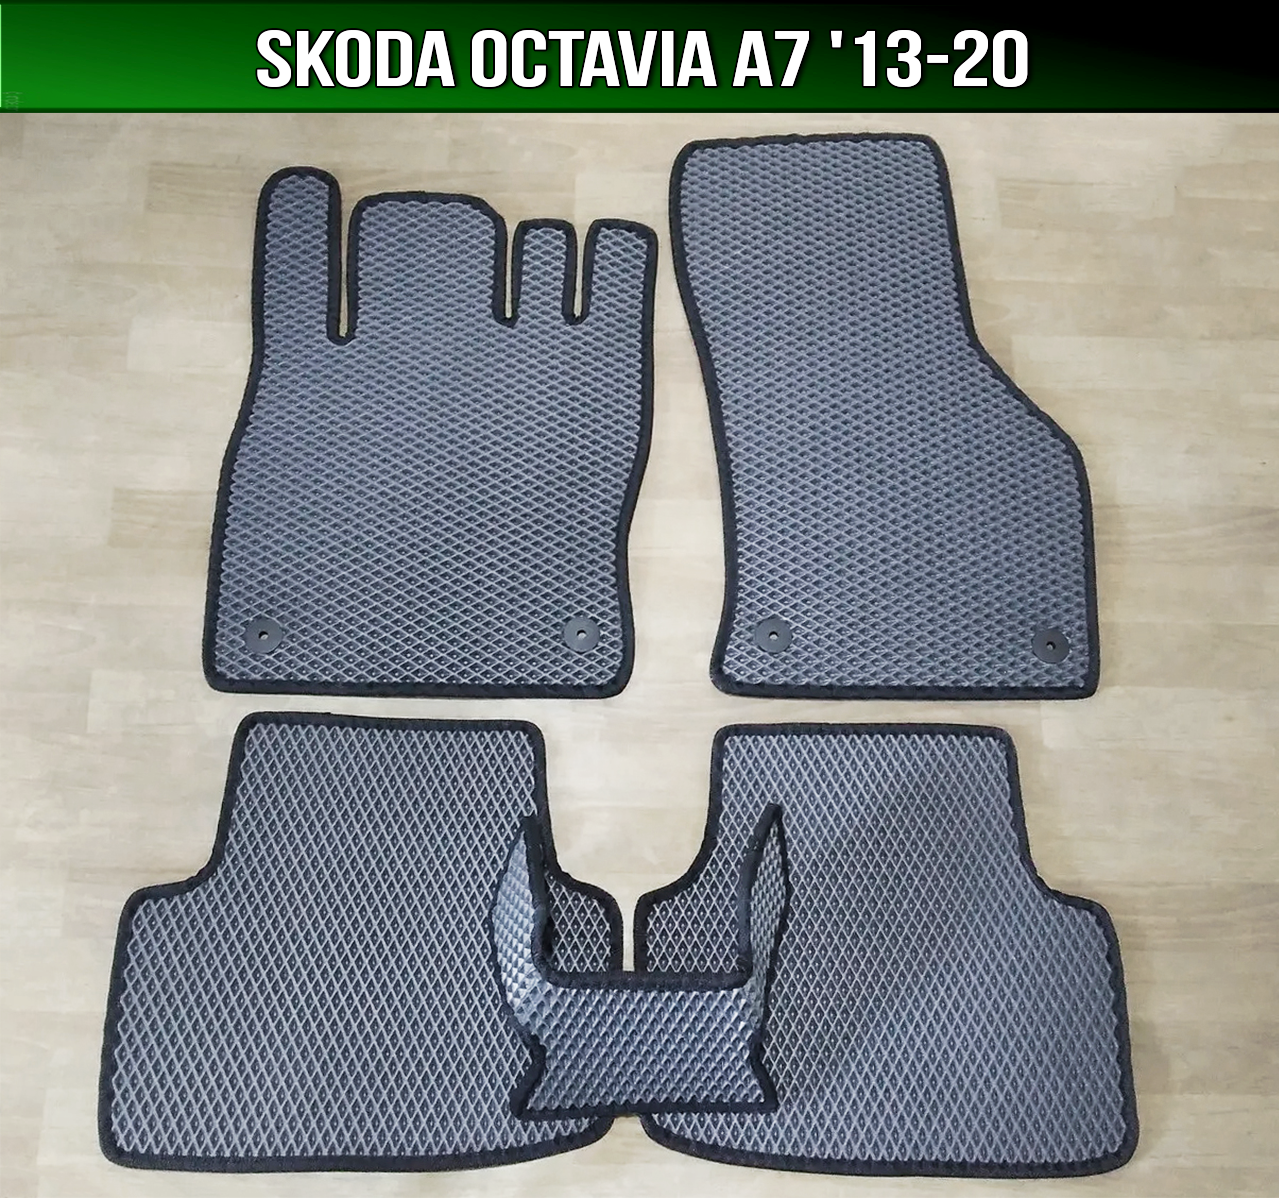 ЄВА килимки Skoda Octavia A7 '13-20. EVA килими Шкода Октавія А7